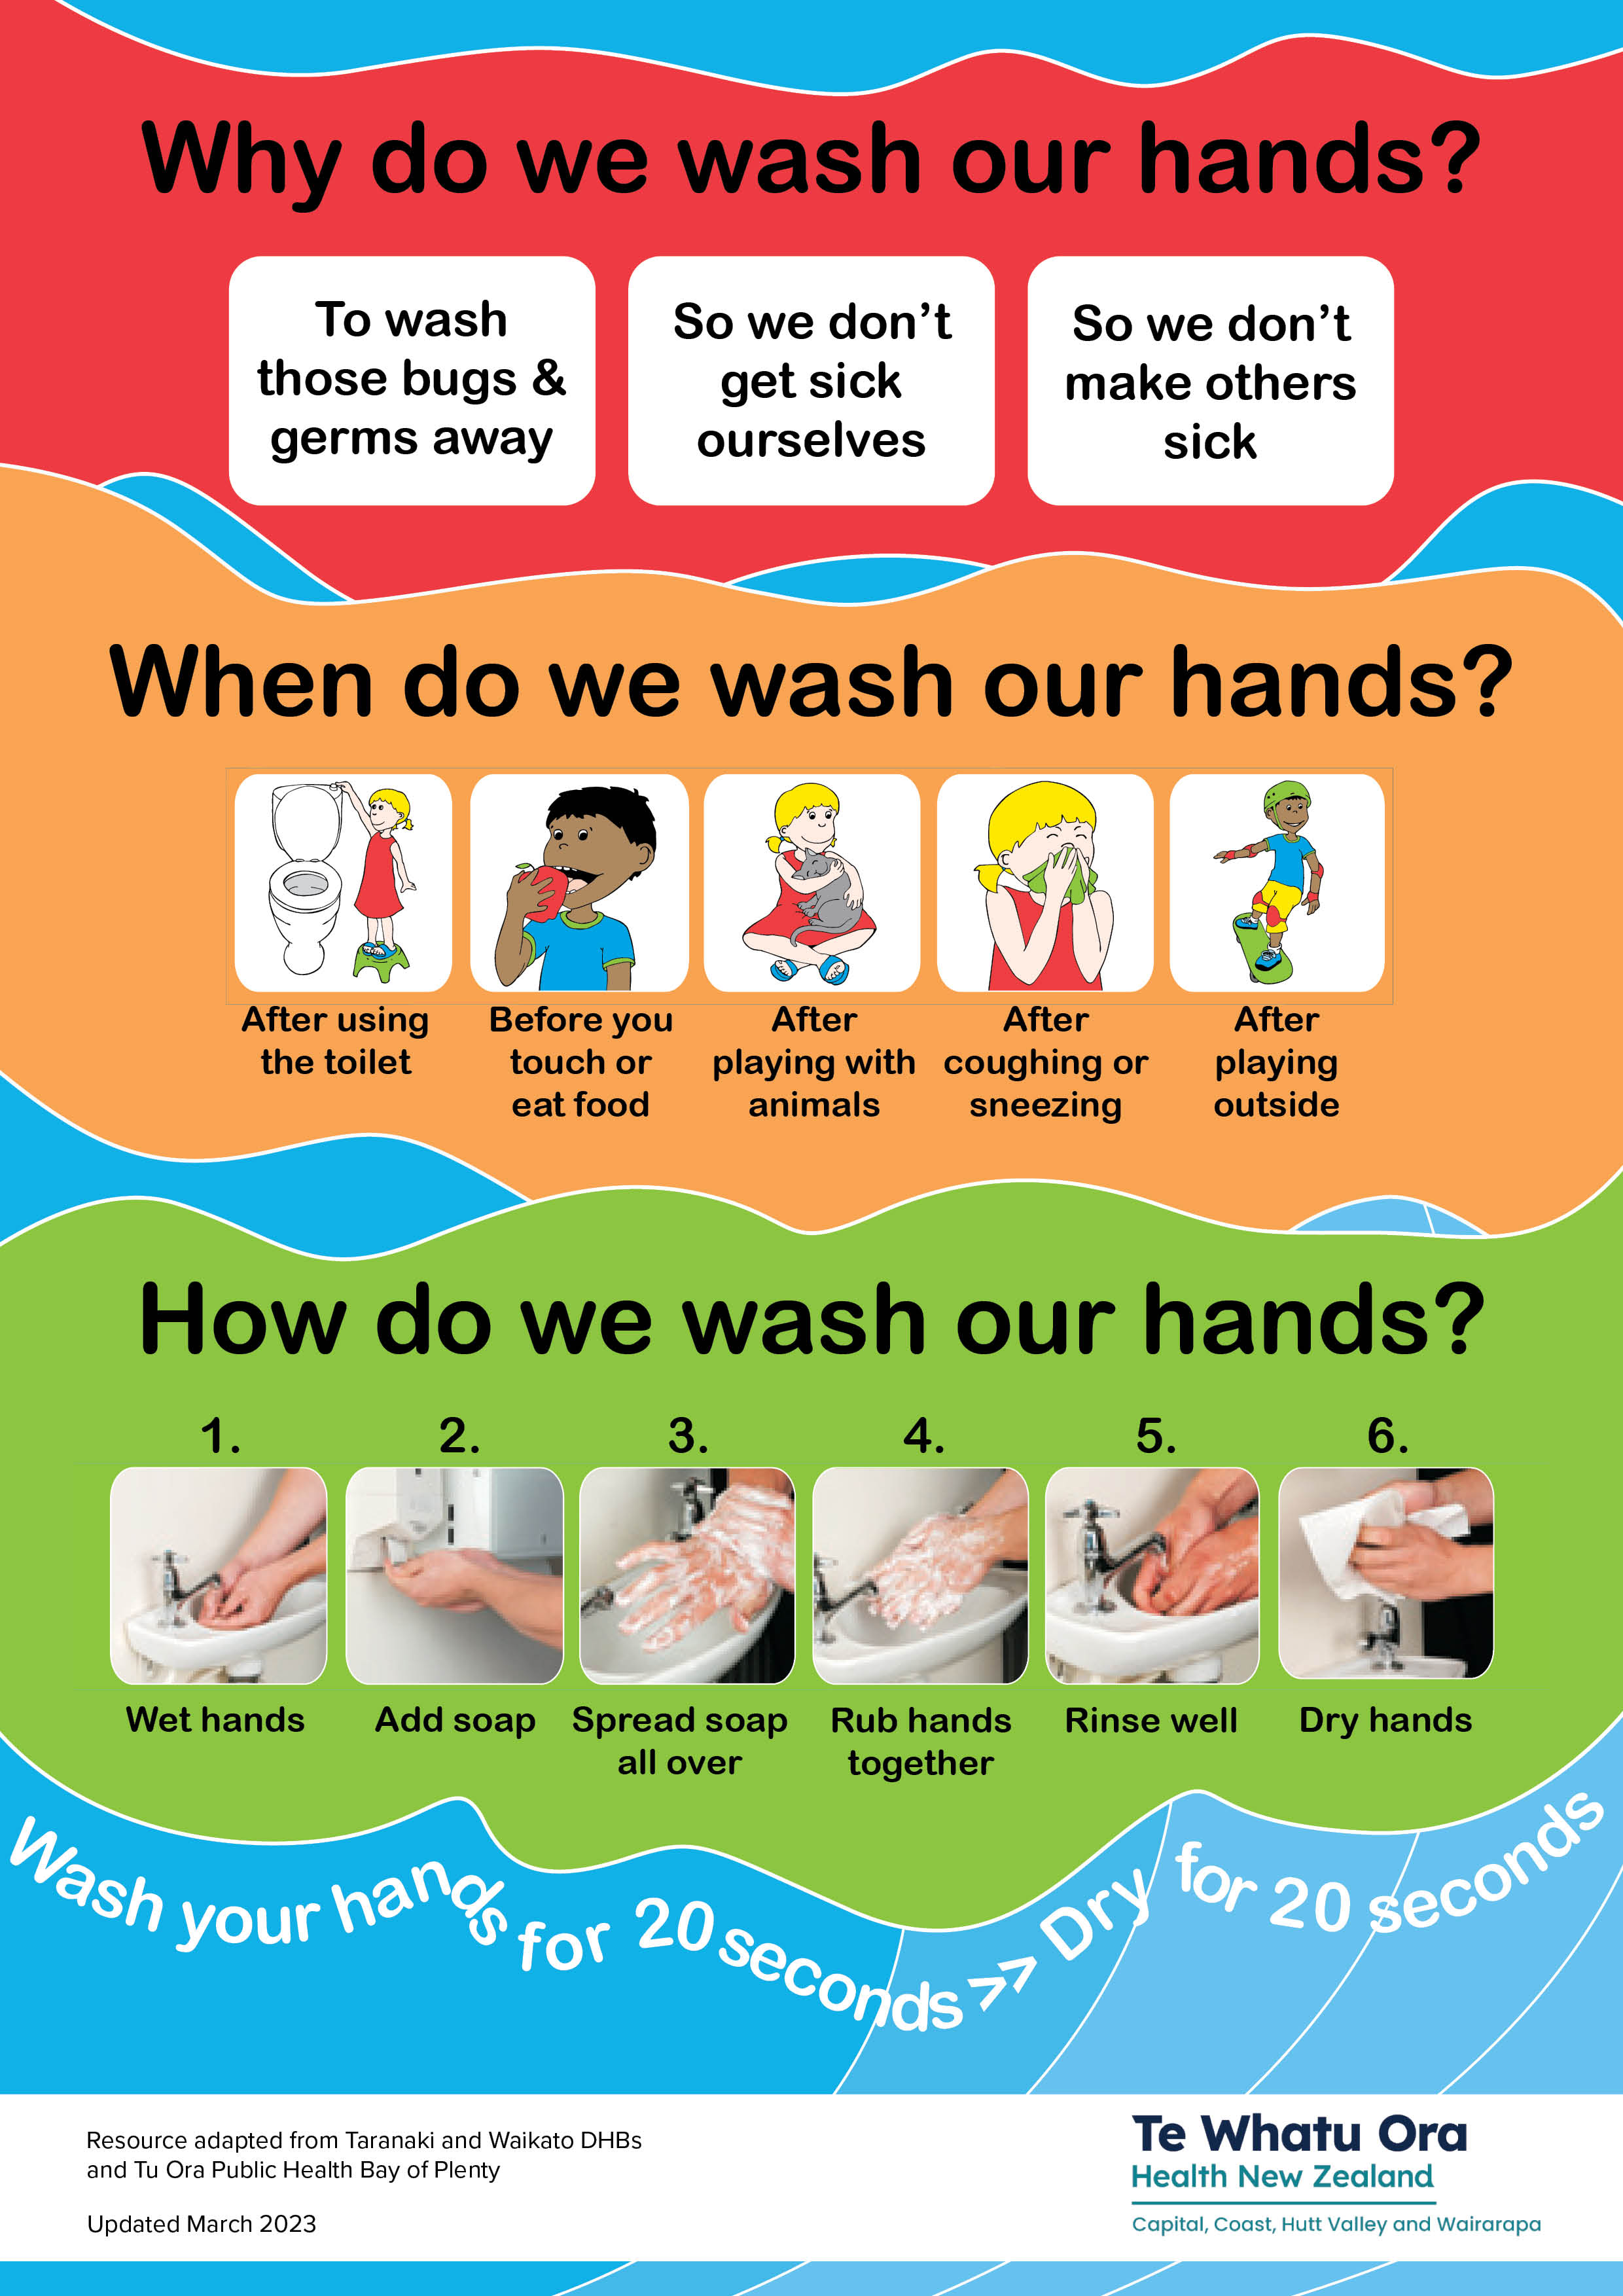 Hand washing poster